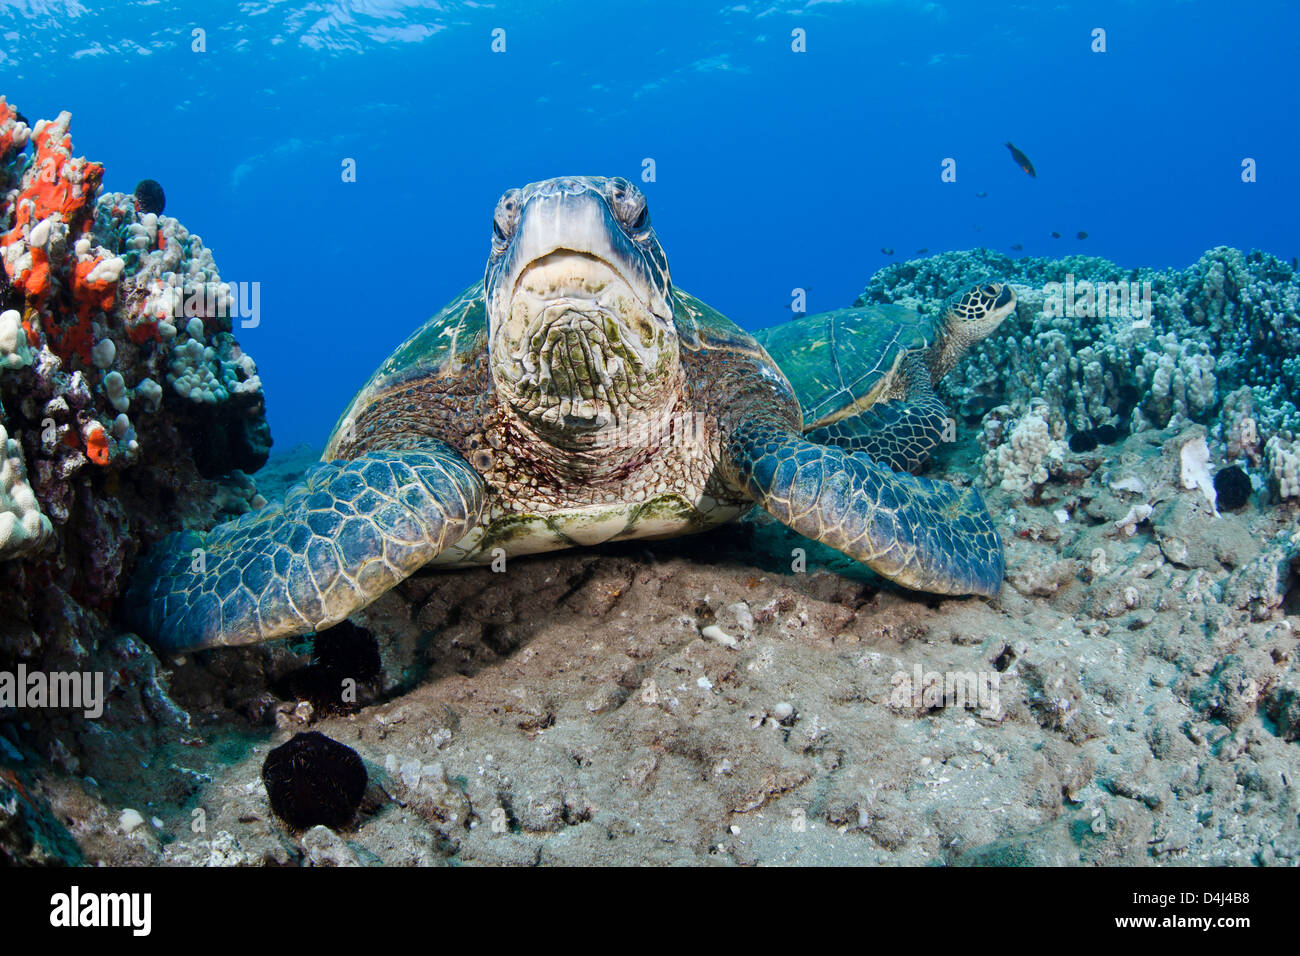 Green sea turtles, Chelonia mydas, an endangered species. Hawaii. Stock Photo